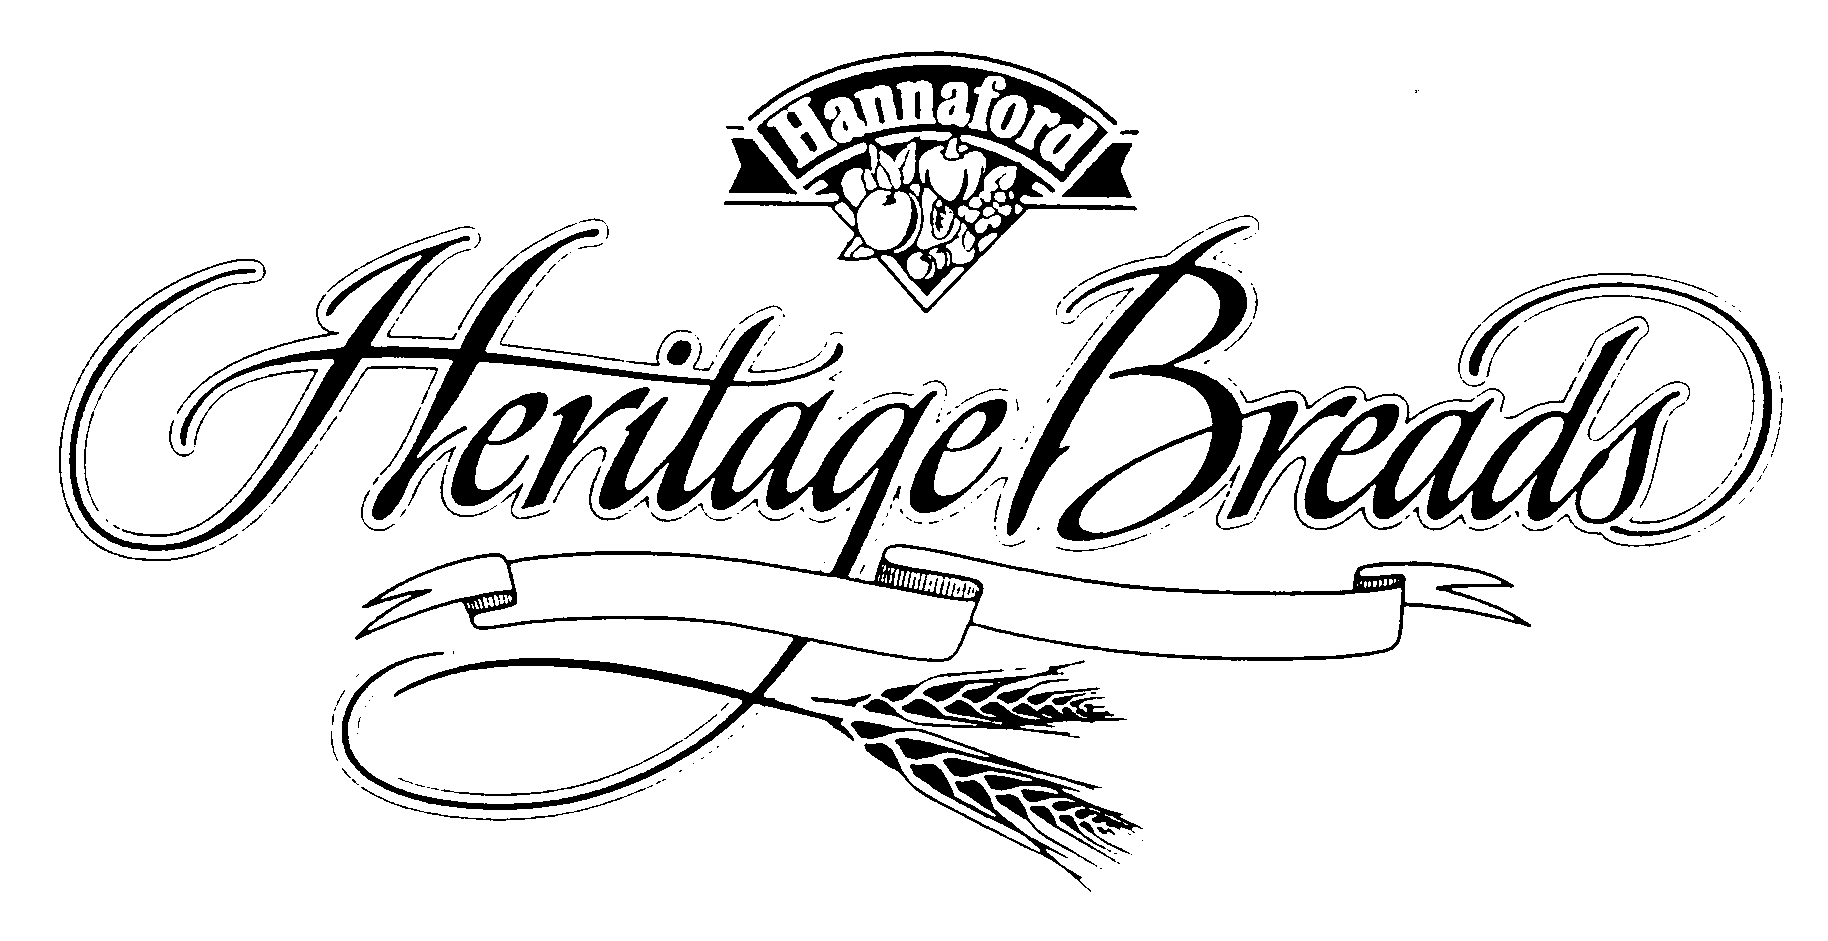  HANNAFORD HERITAGE BREADS